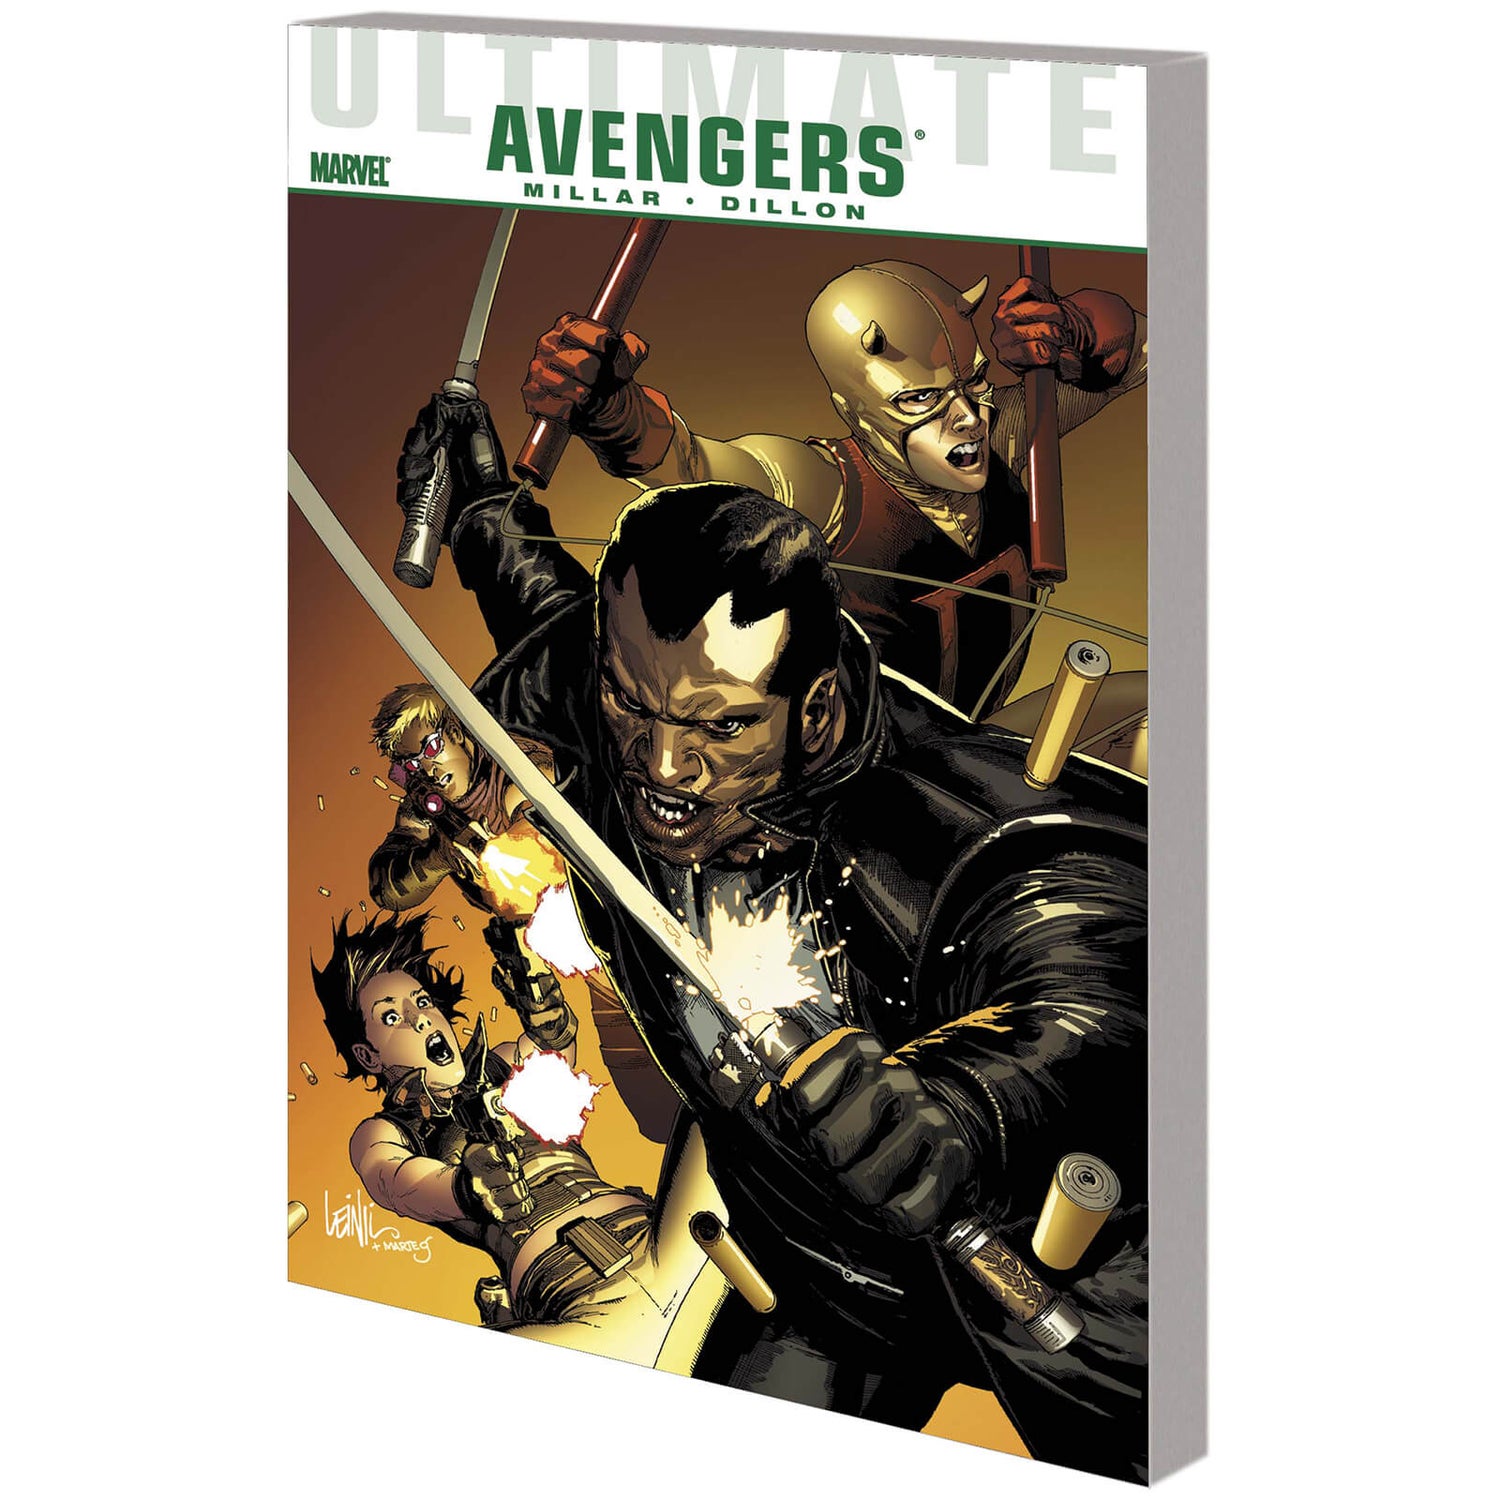 Marvel Comics Ultimate Comics Avengers Blade Vs Avengers Trade Paperback Graphic Novel